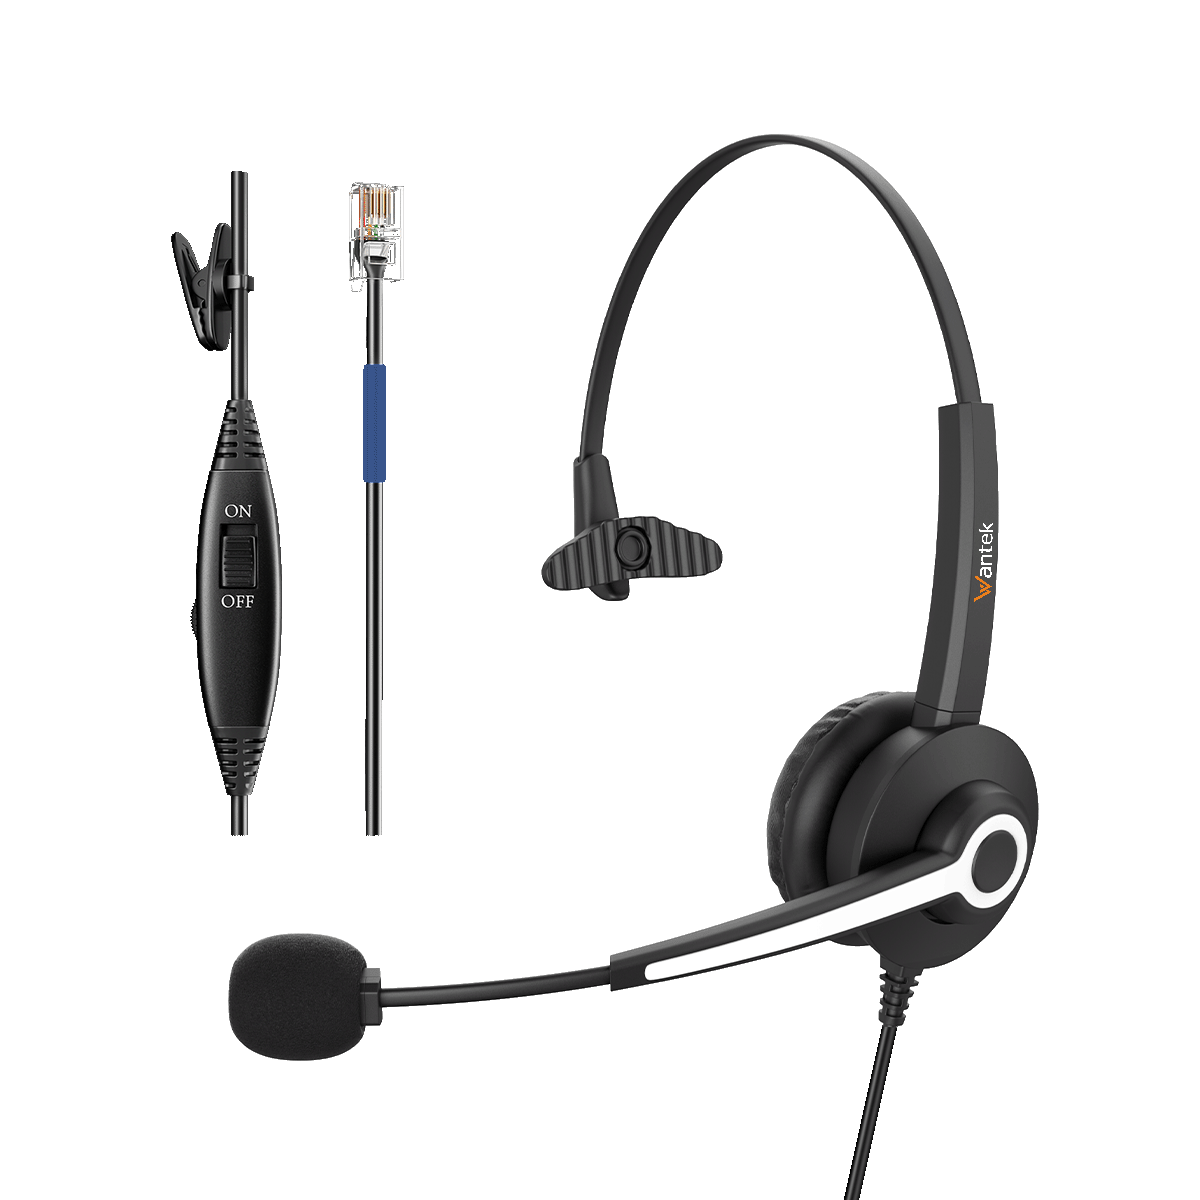 Wantek® h681 mono RJ9【RJ4】 headset for corded phones